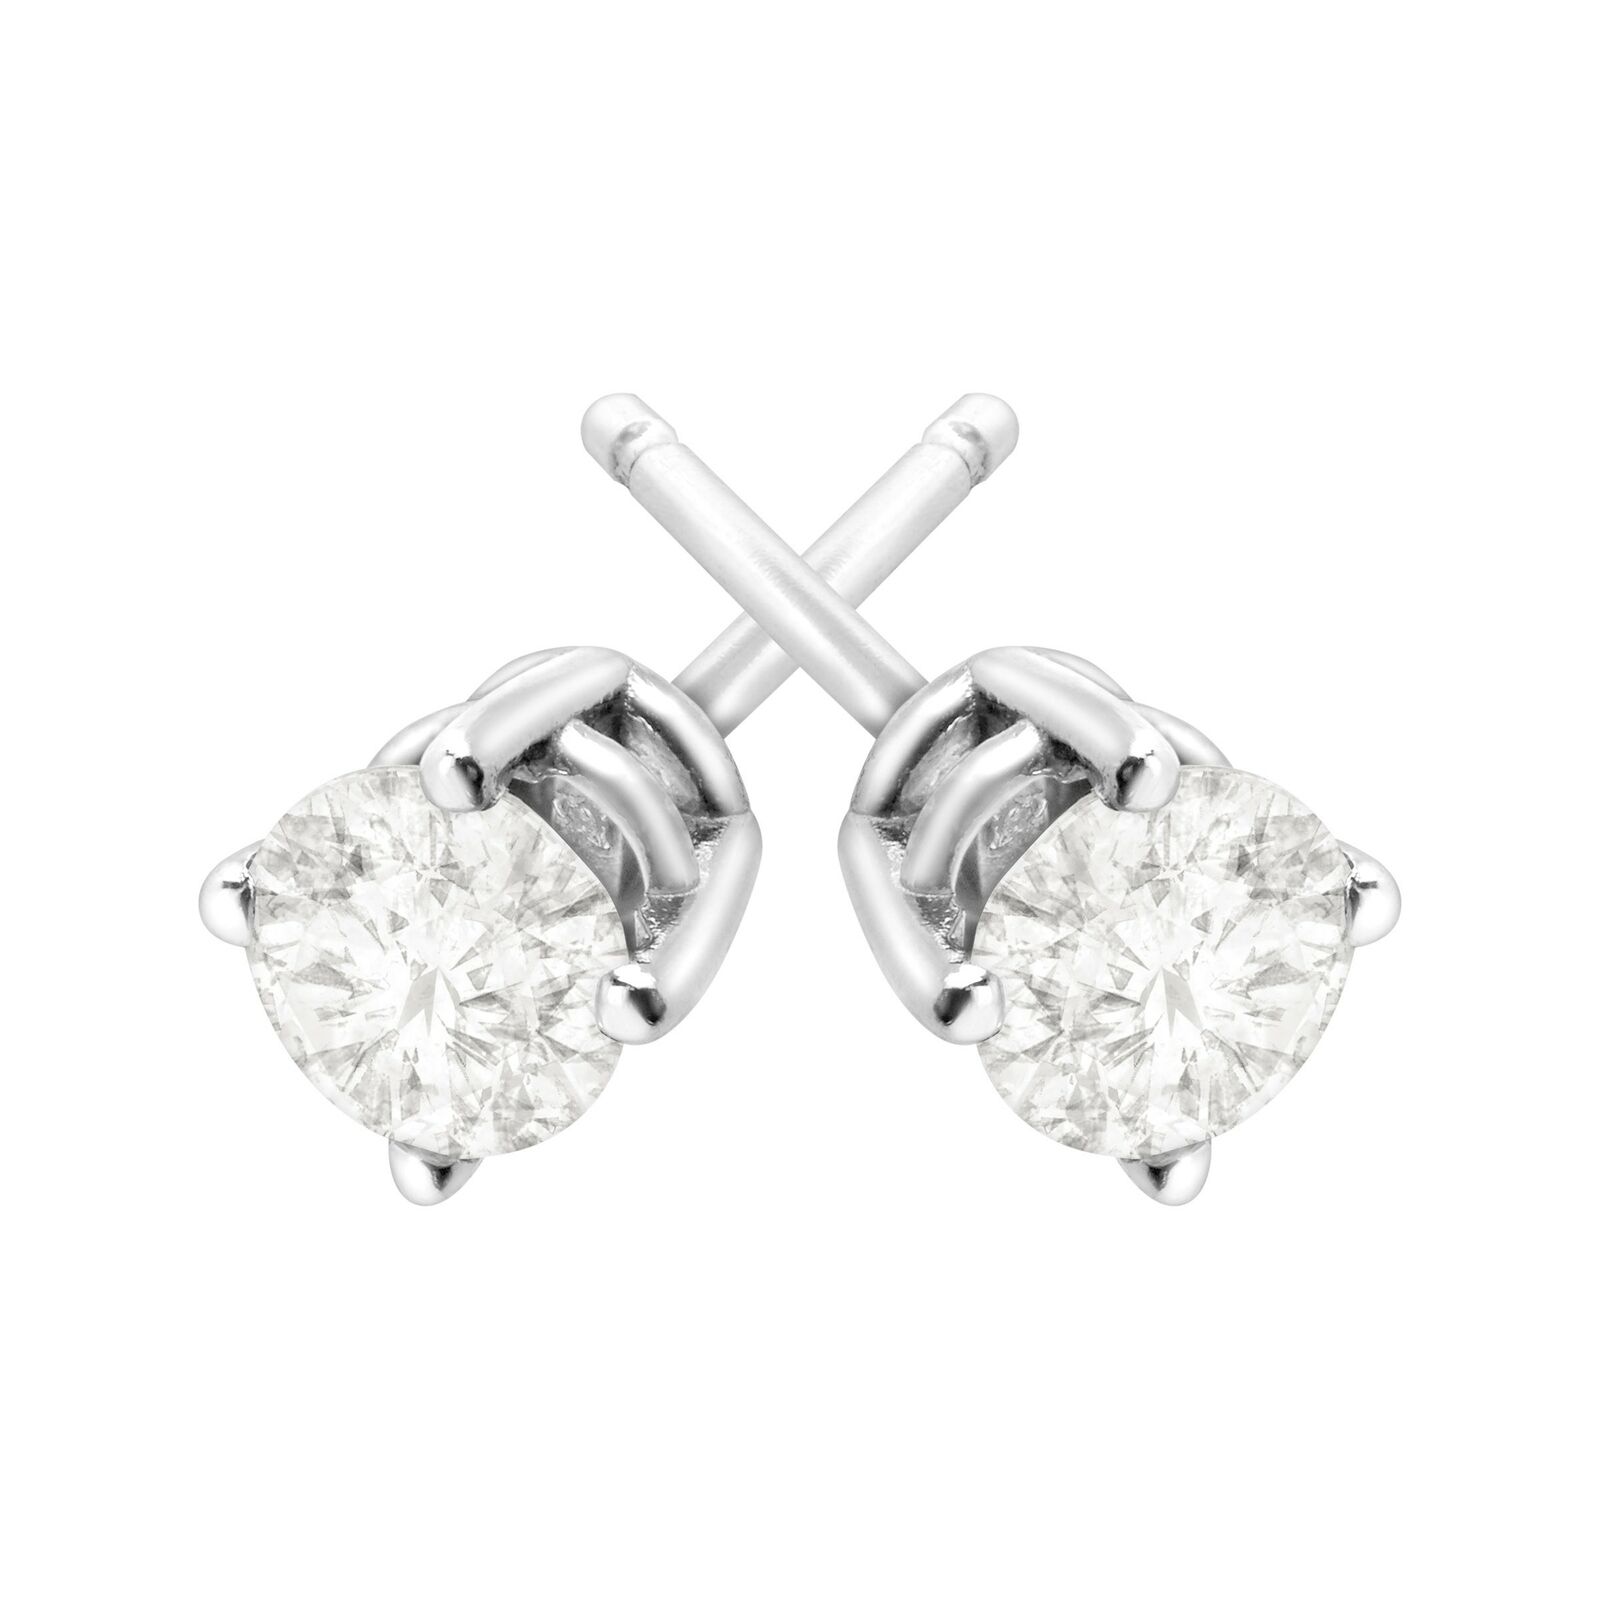 Ct Diamond Stud Earrings In K White Gold Nuhbeginc Multimedia